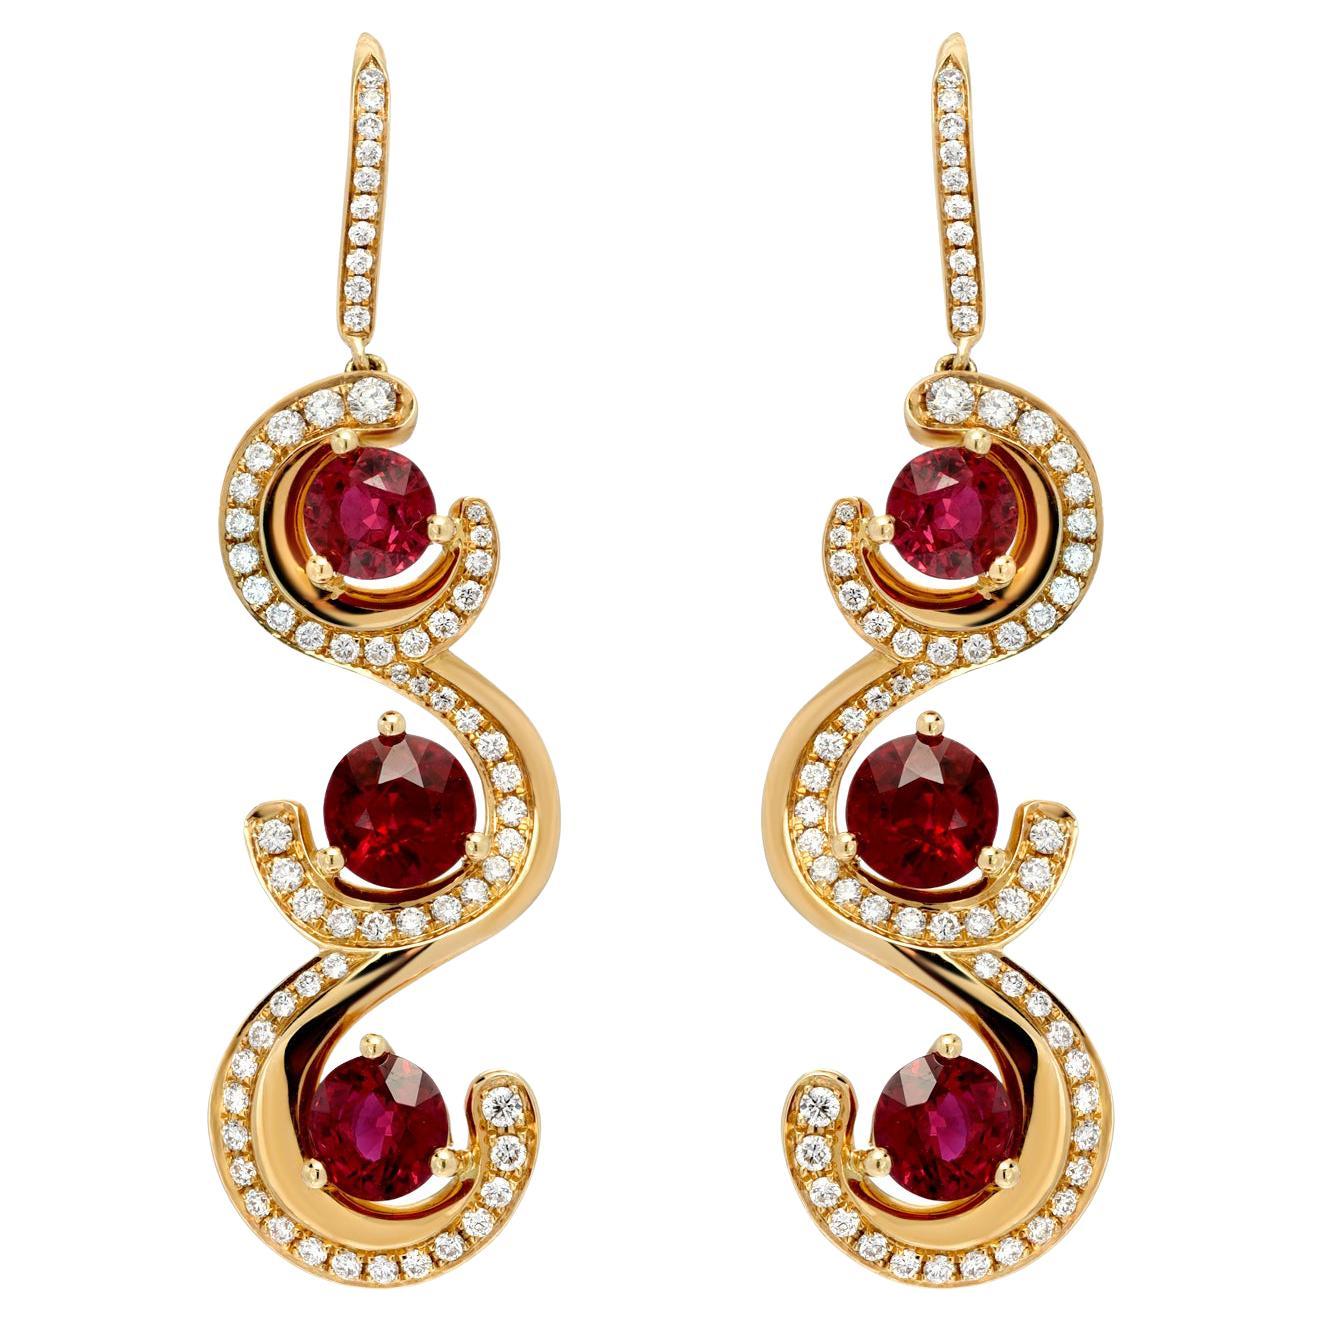 Burma Ruby Earrings 7.19 Carats